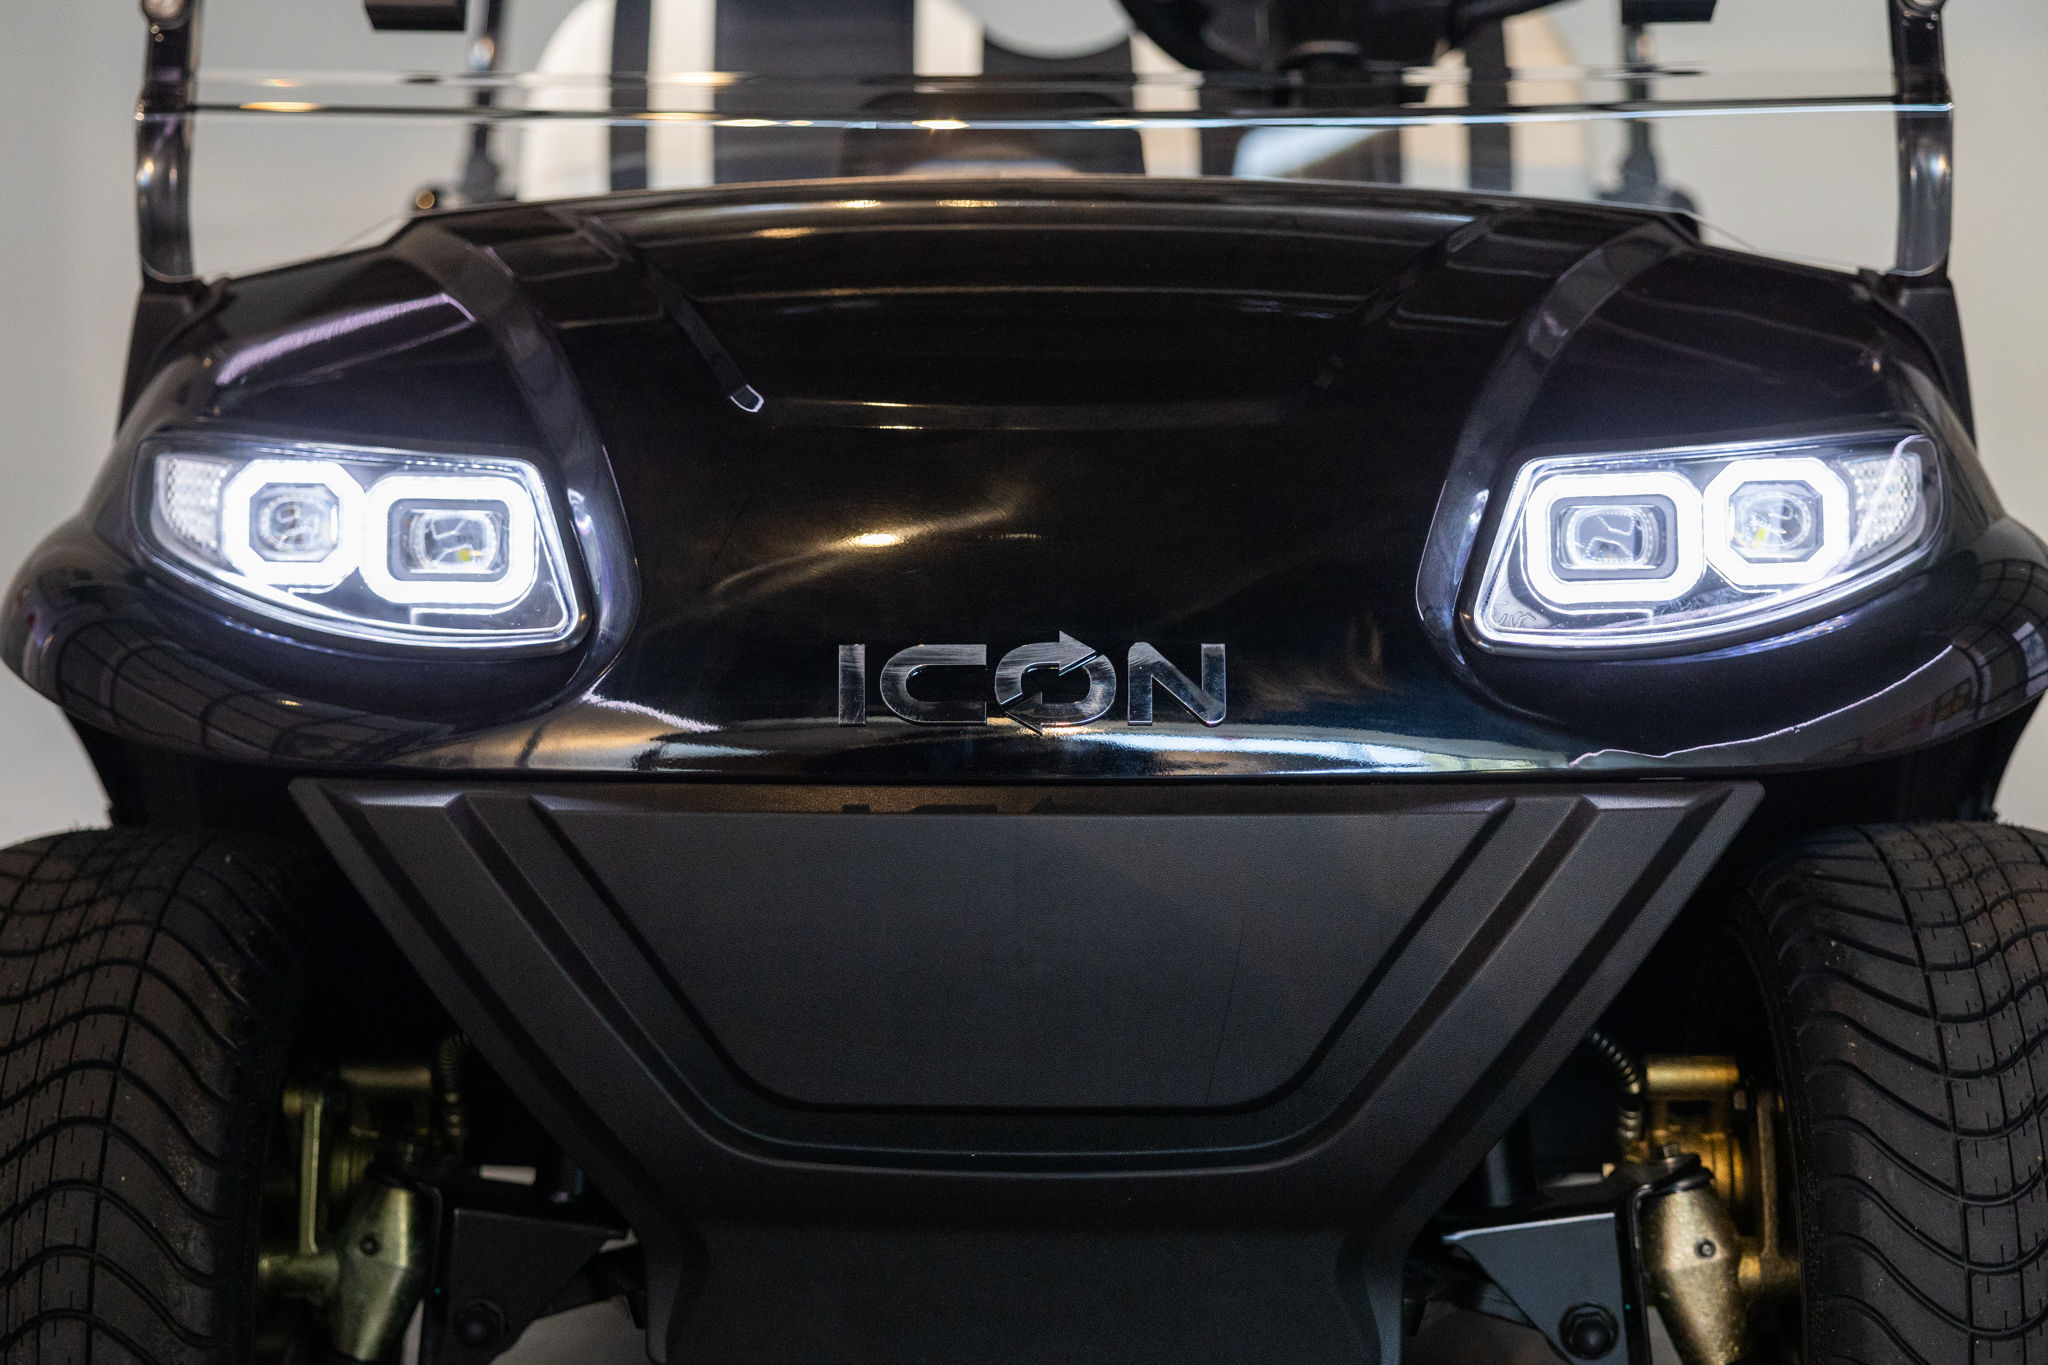 ICON Electric Vehicles